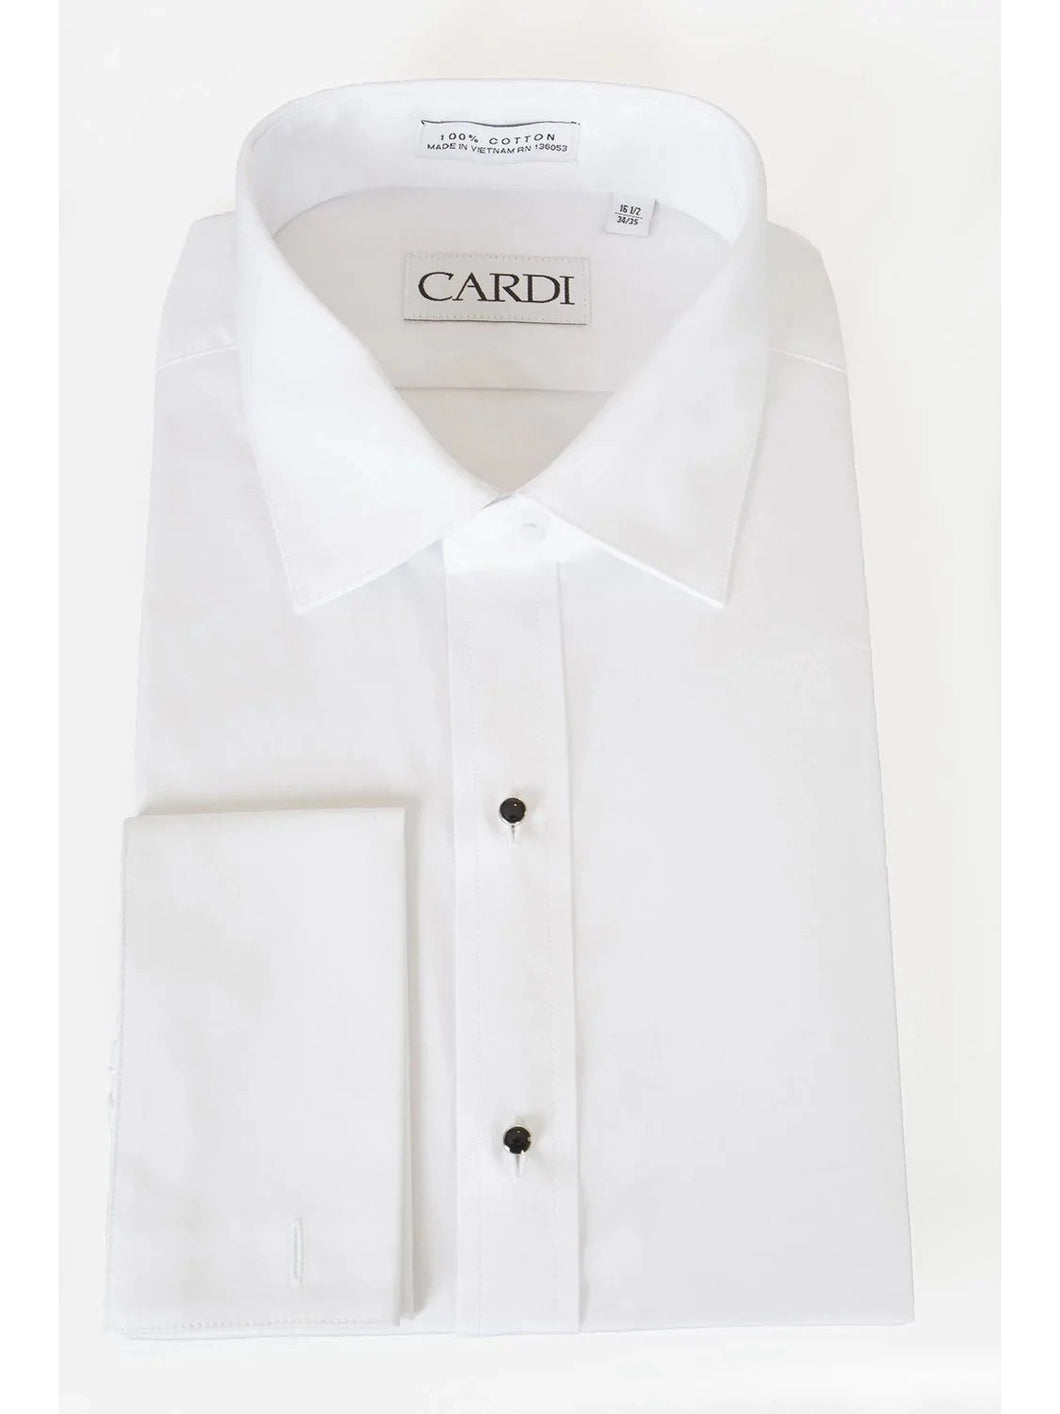 White Non-Pleated Spread Collar Tuxedo Shirt- French Cuffs